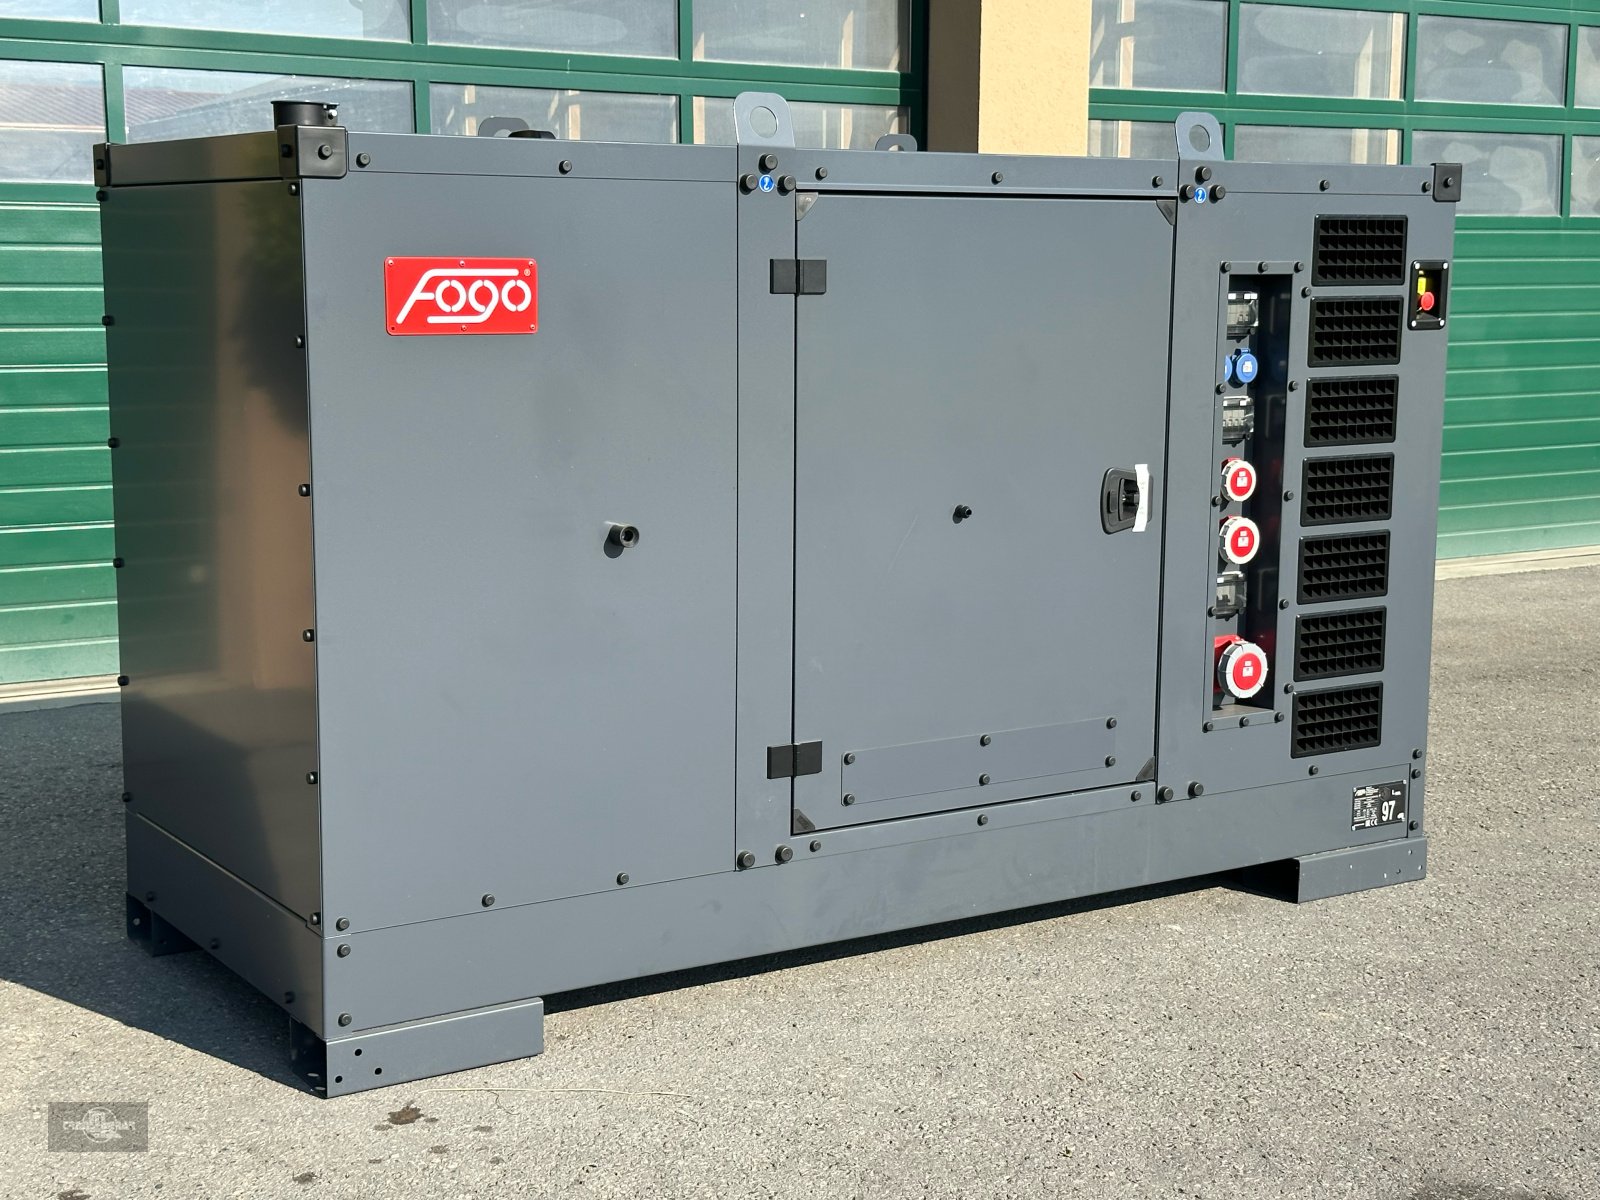 Sonstige Hoftechnik des Typs Iveco FOGO MG-Power 100/110KVA Strom Aggregat Notstrom, Neumaschine in Rankweil (Bild 1)